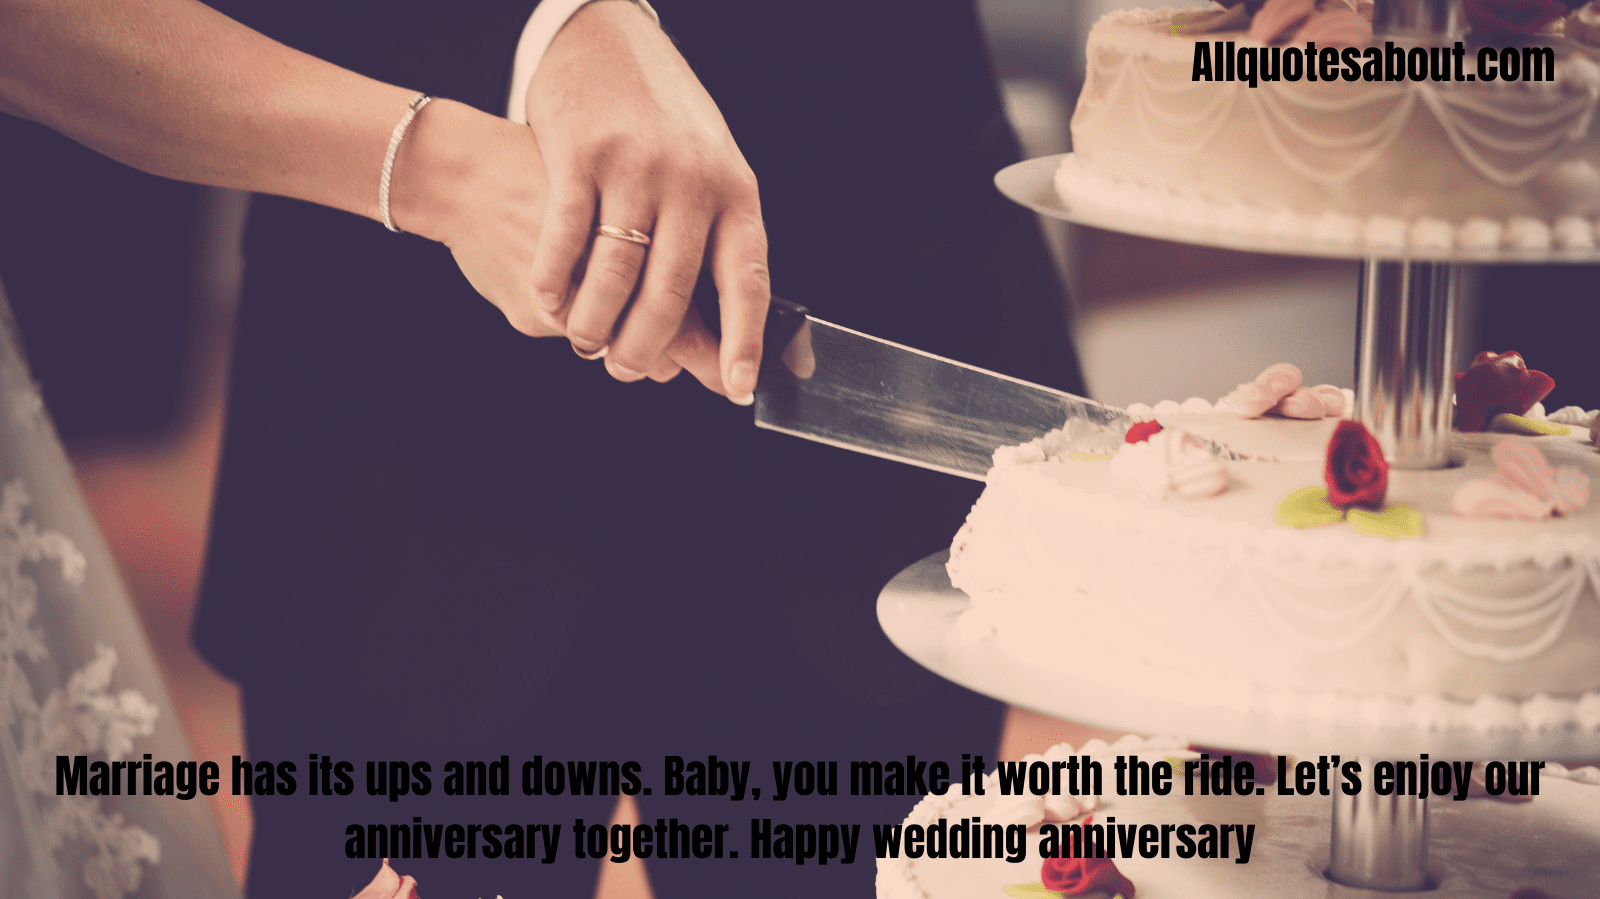 Wedding Anniversary Quotes